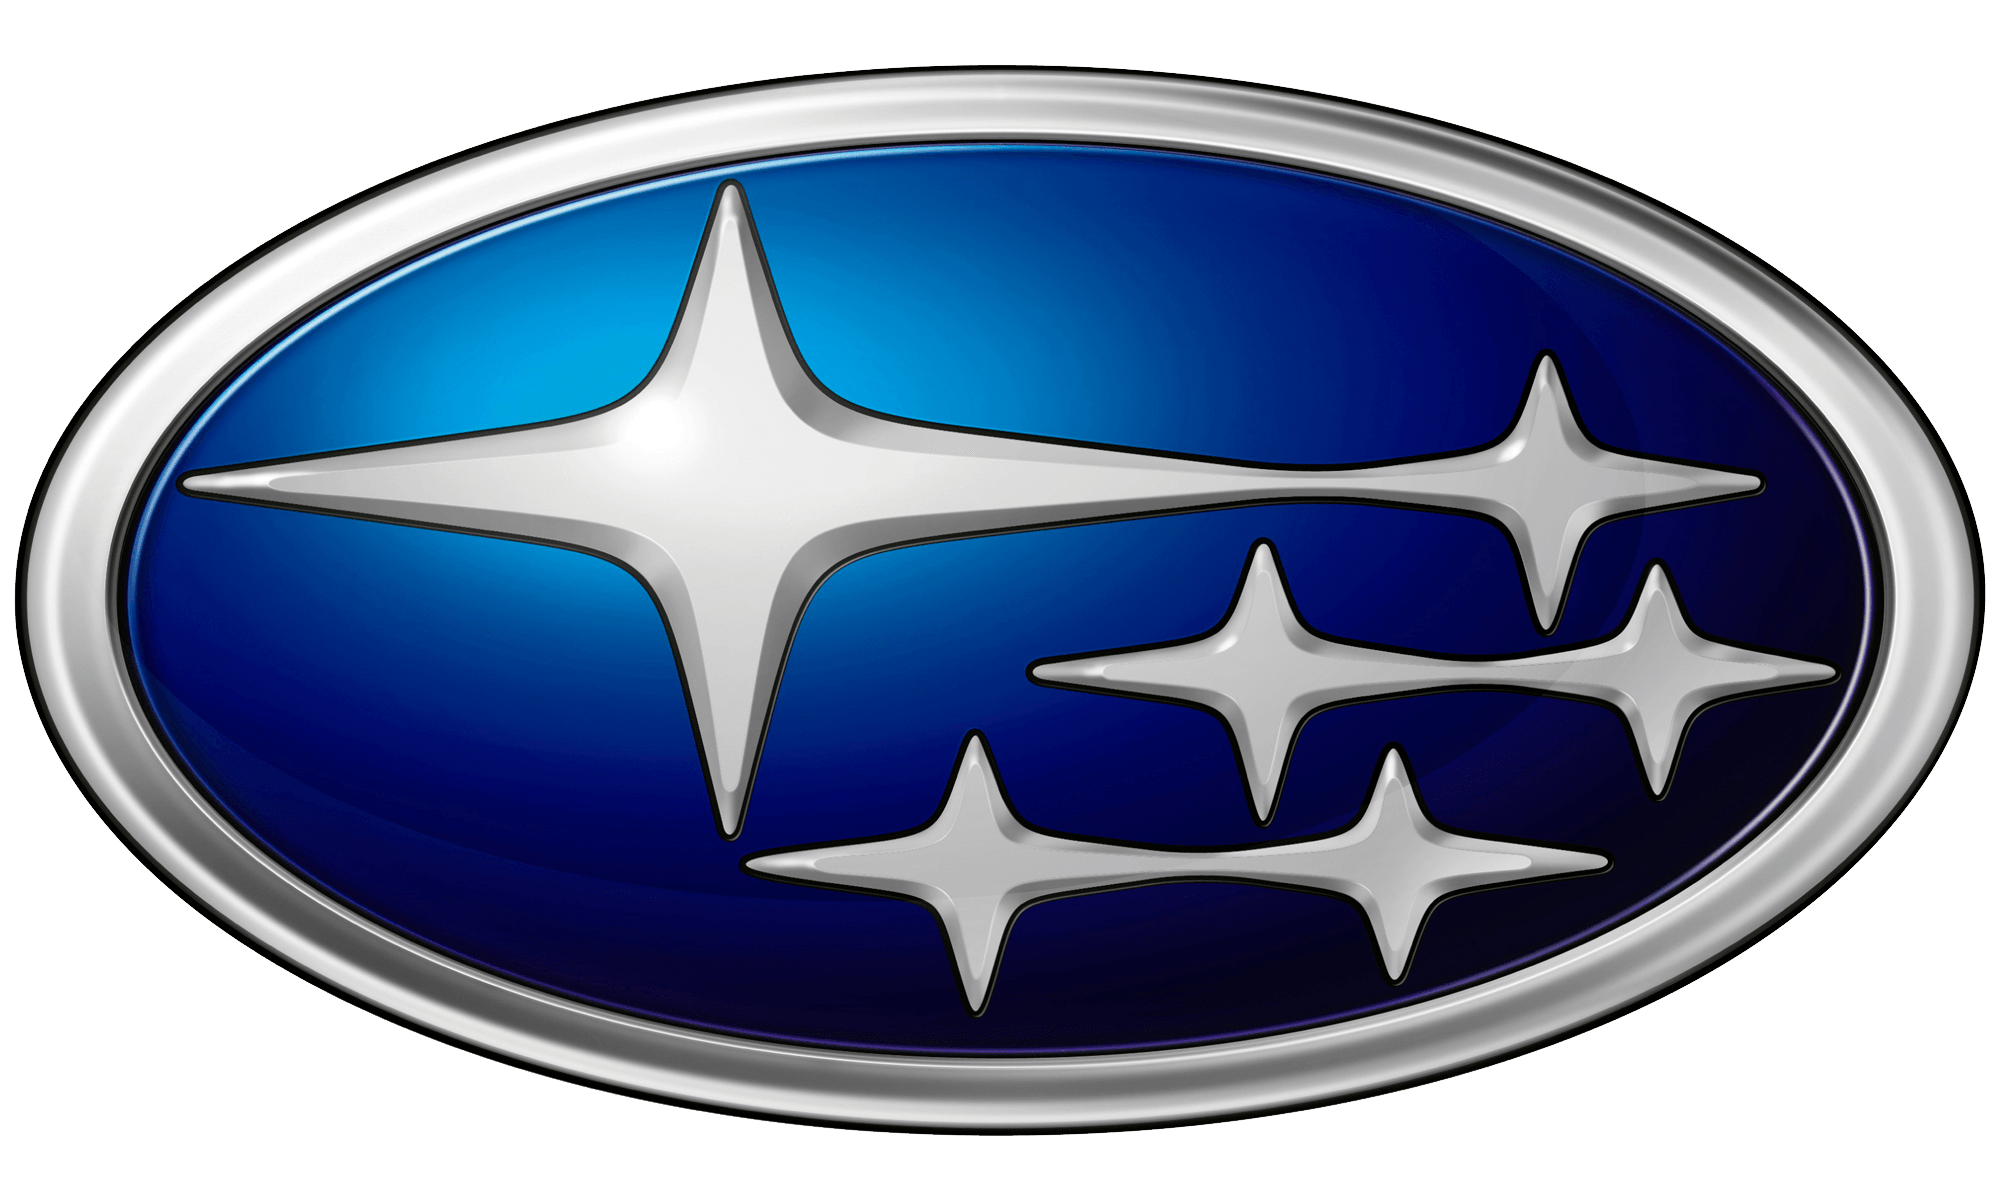 Download Subaru Logo In Svg V